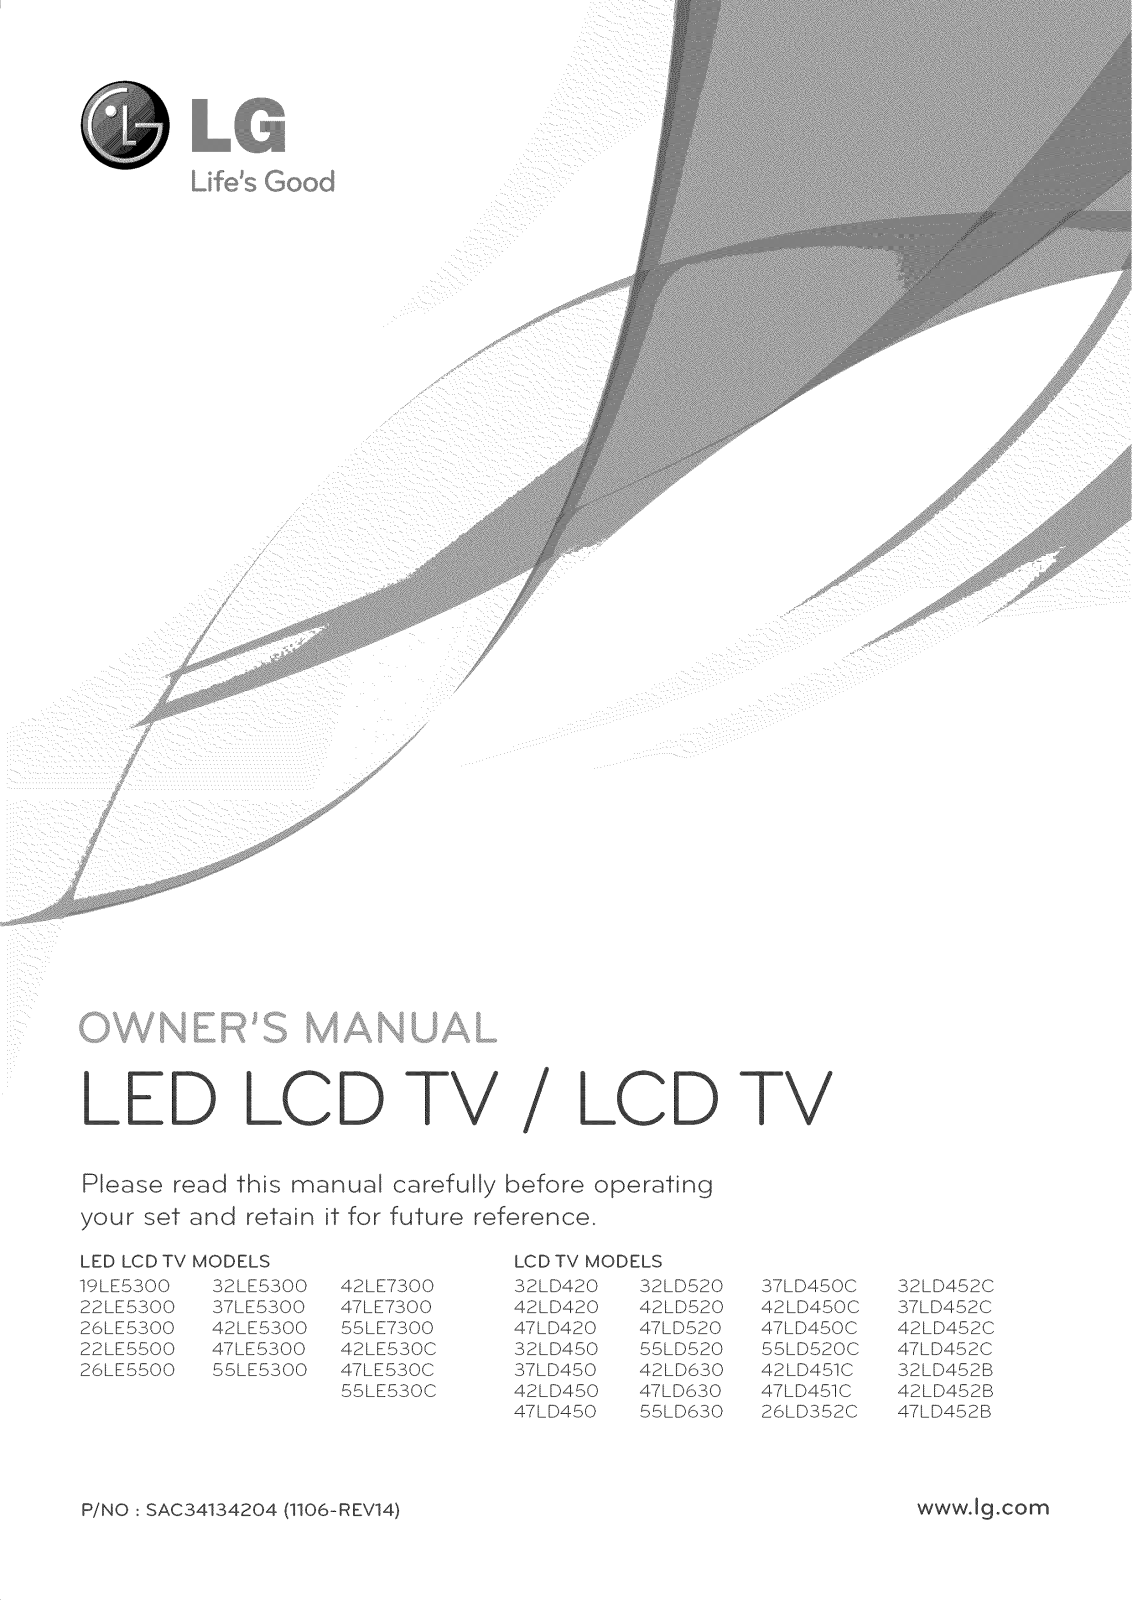 LG 55LD520, 47LD520, 47LD450C, 47LD450, 42LD520 Owner’s Manual